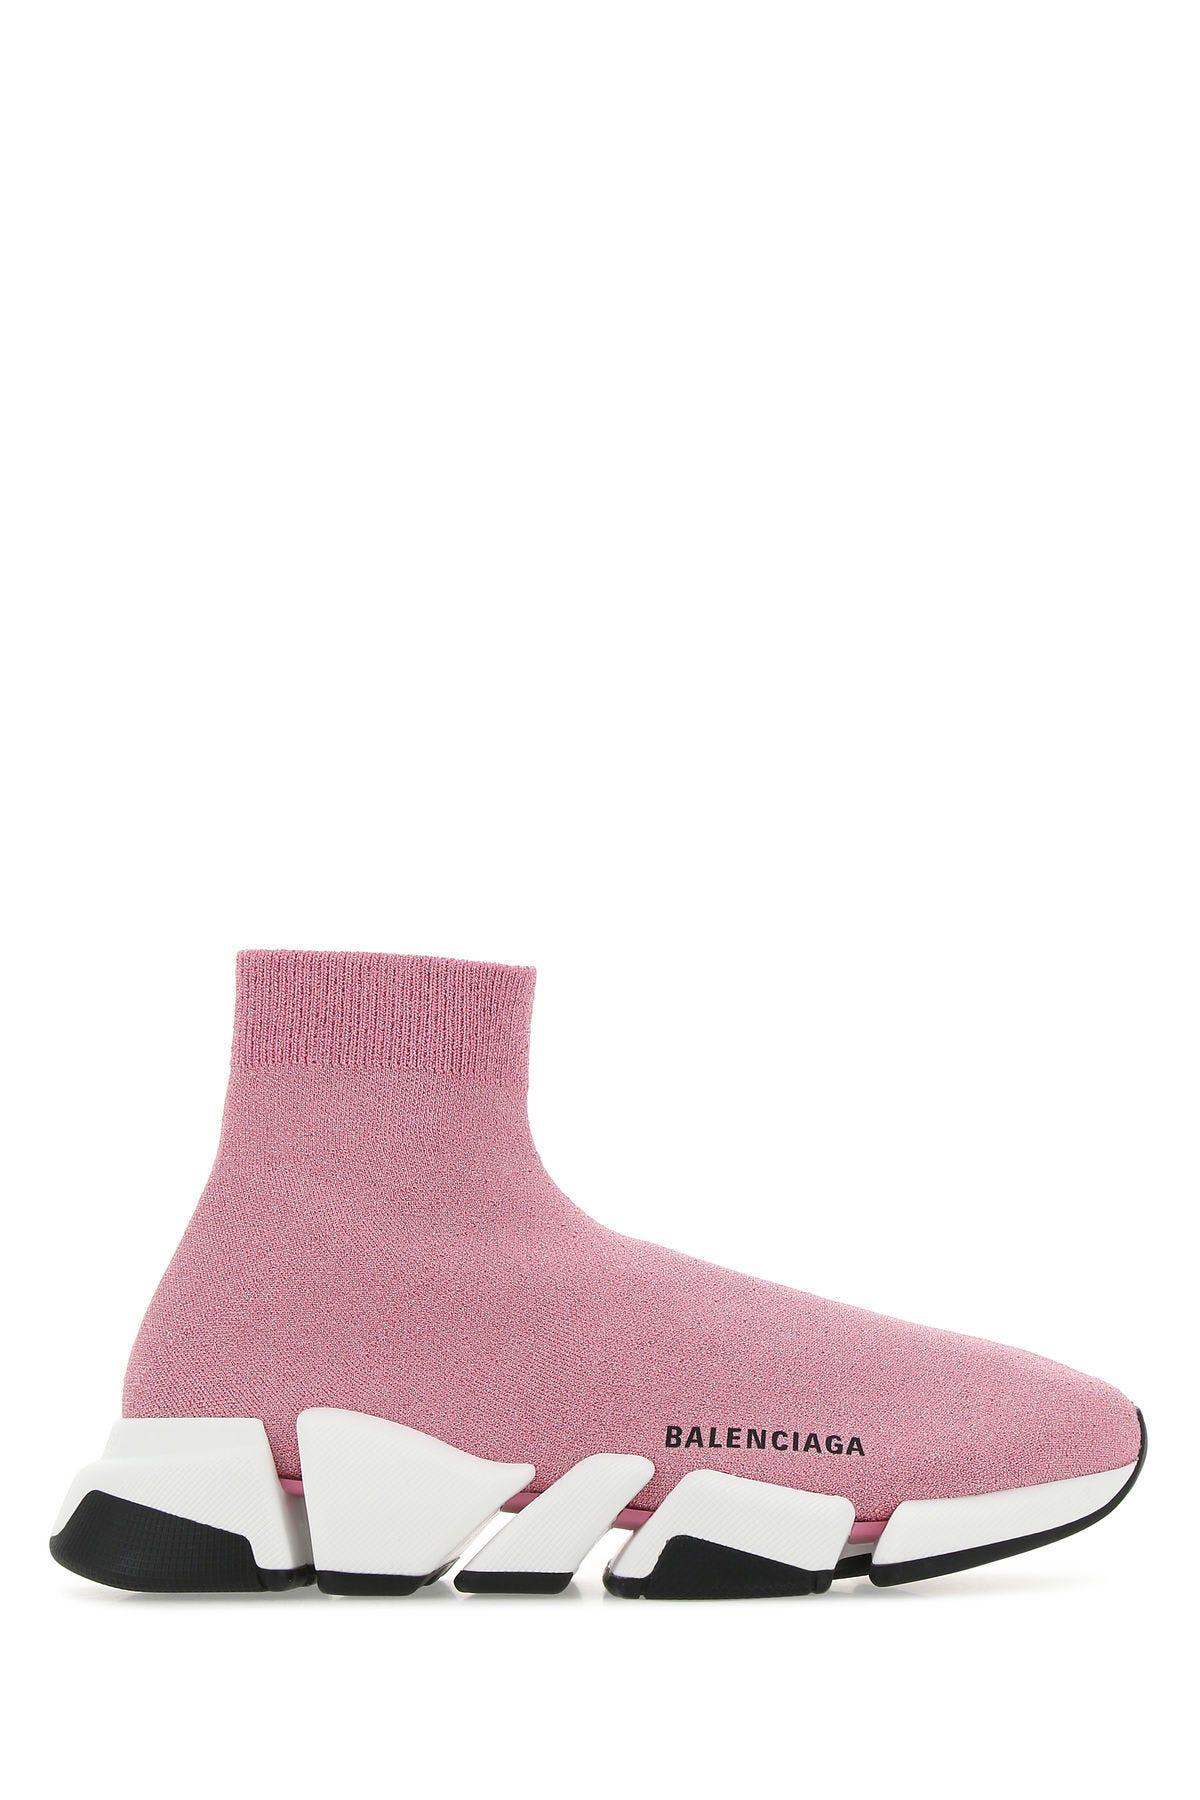 Cheap Slocog Jordan Outlet Sale Online - filippa lace-up | On Sneaker - Balenciaga Slip